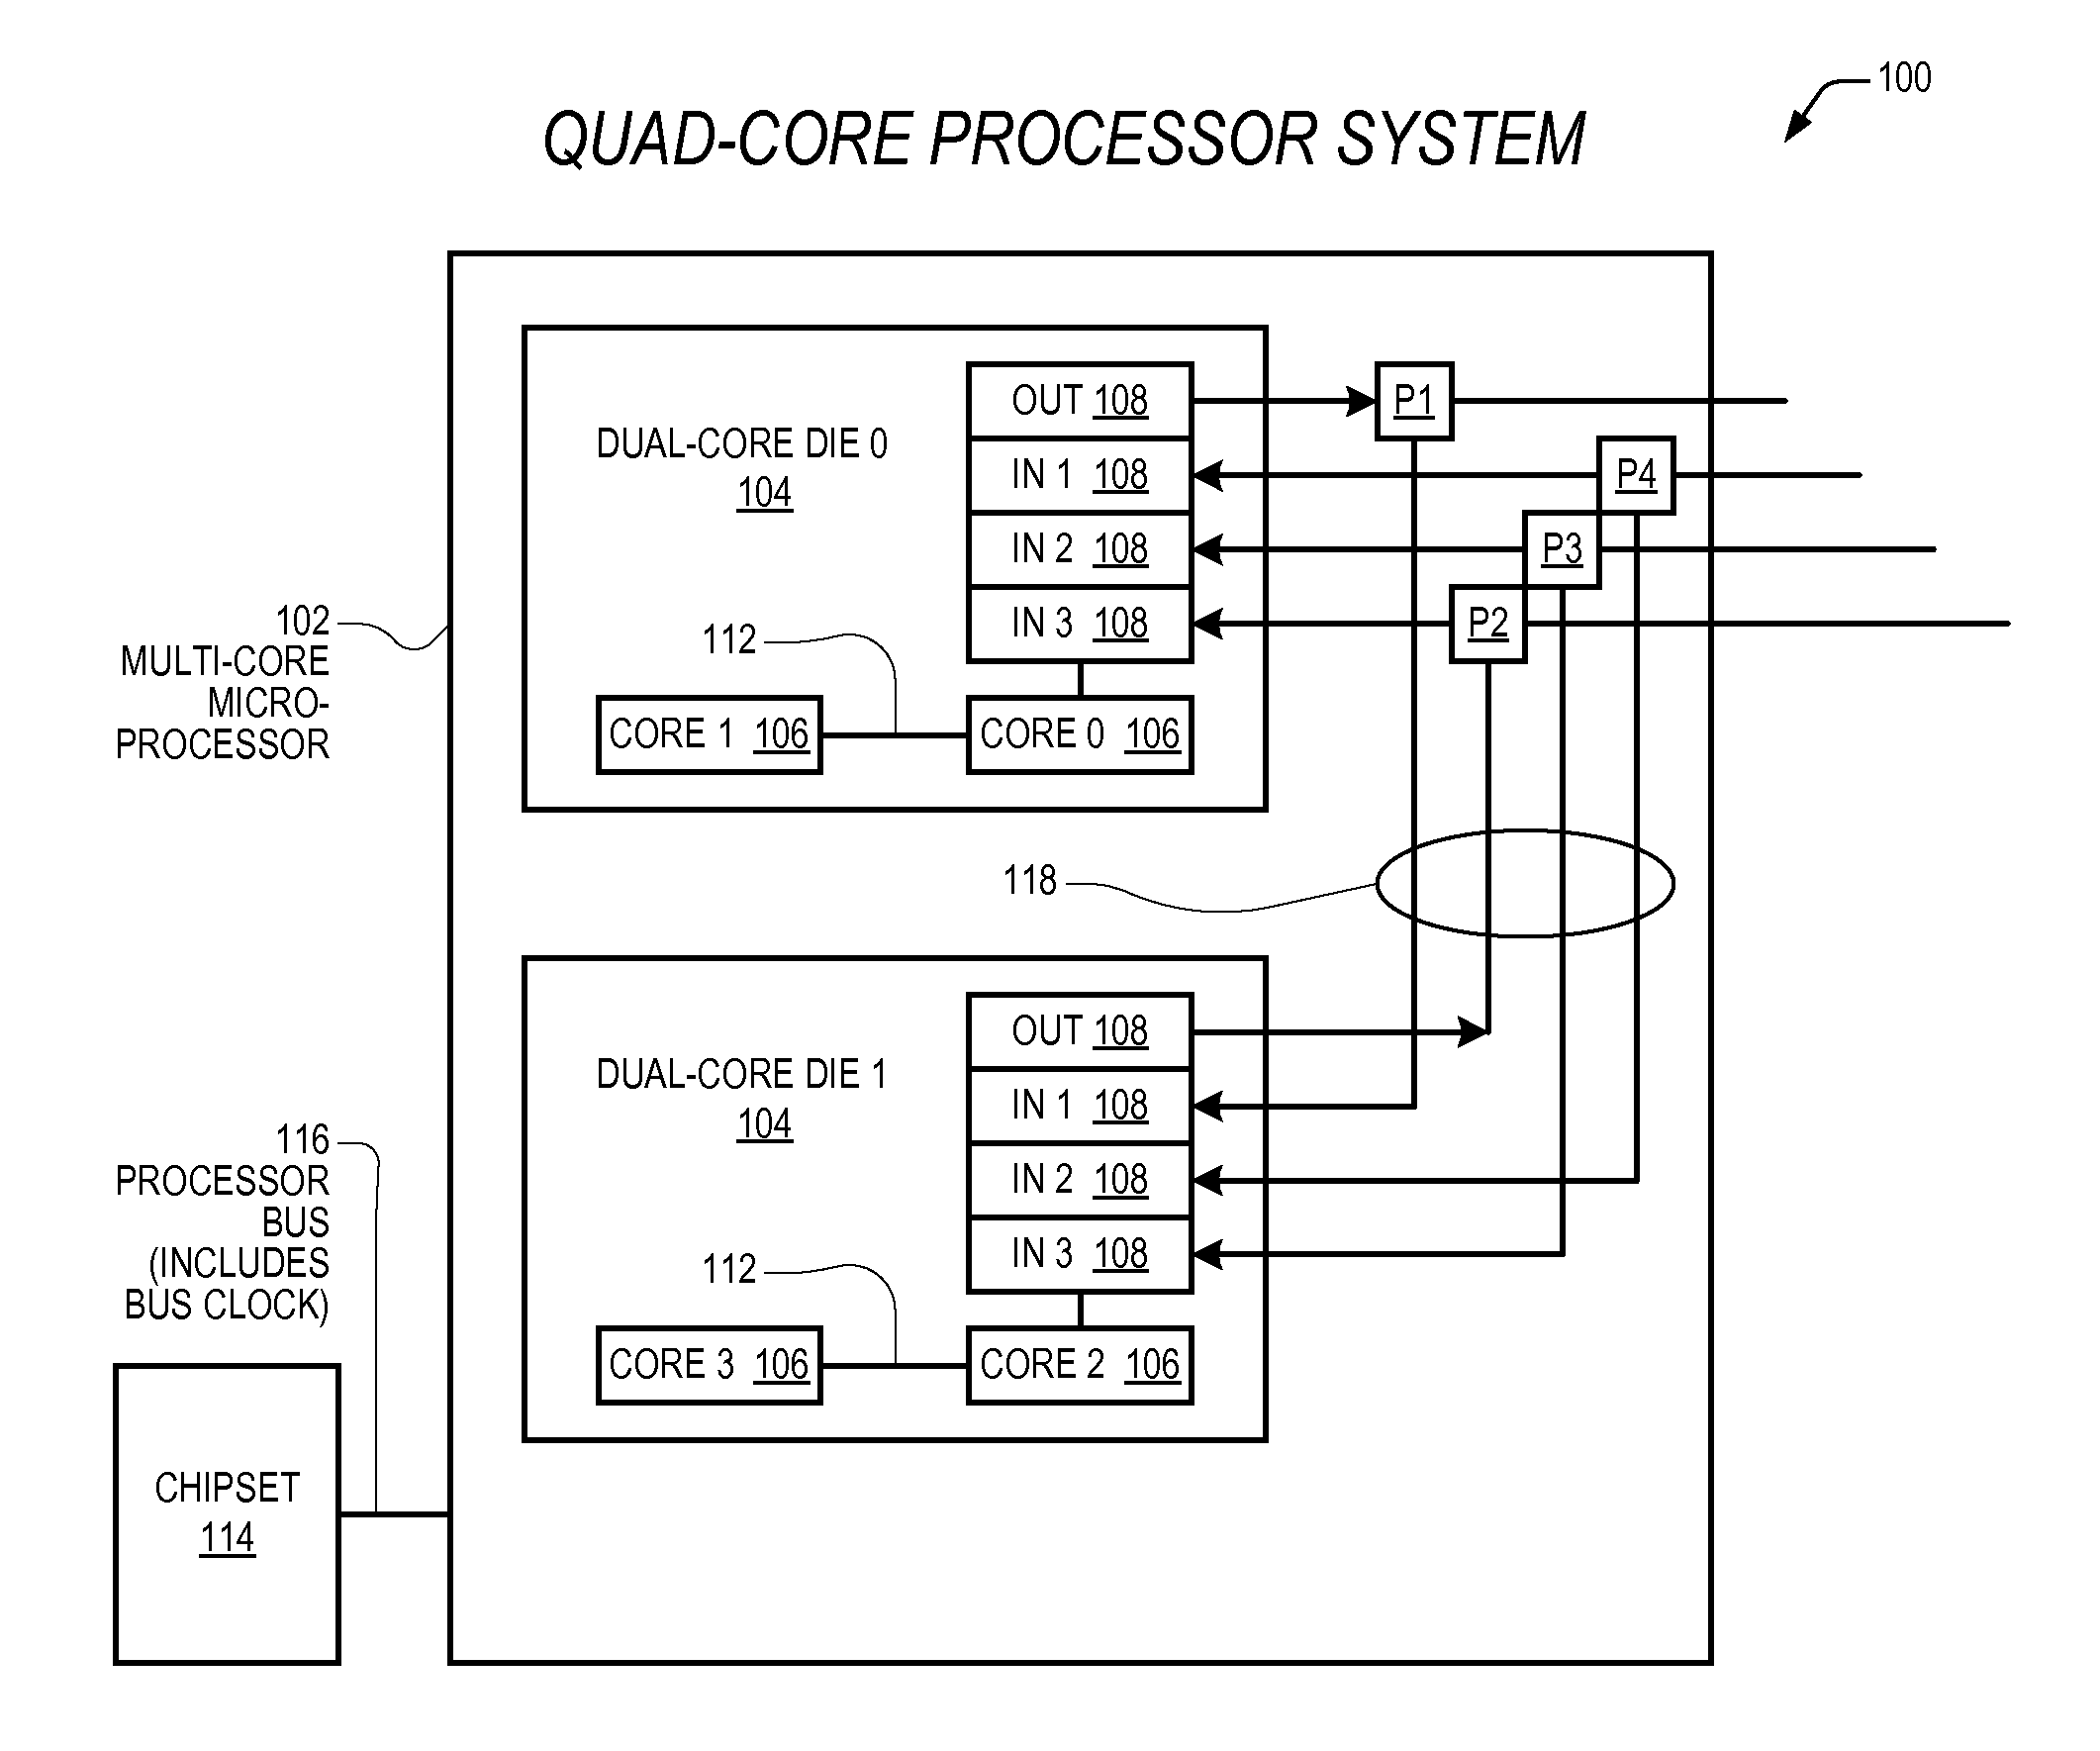 Power state synchronization in a multi-core processor